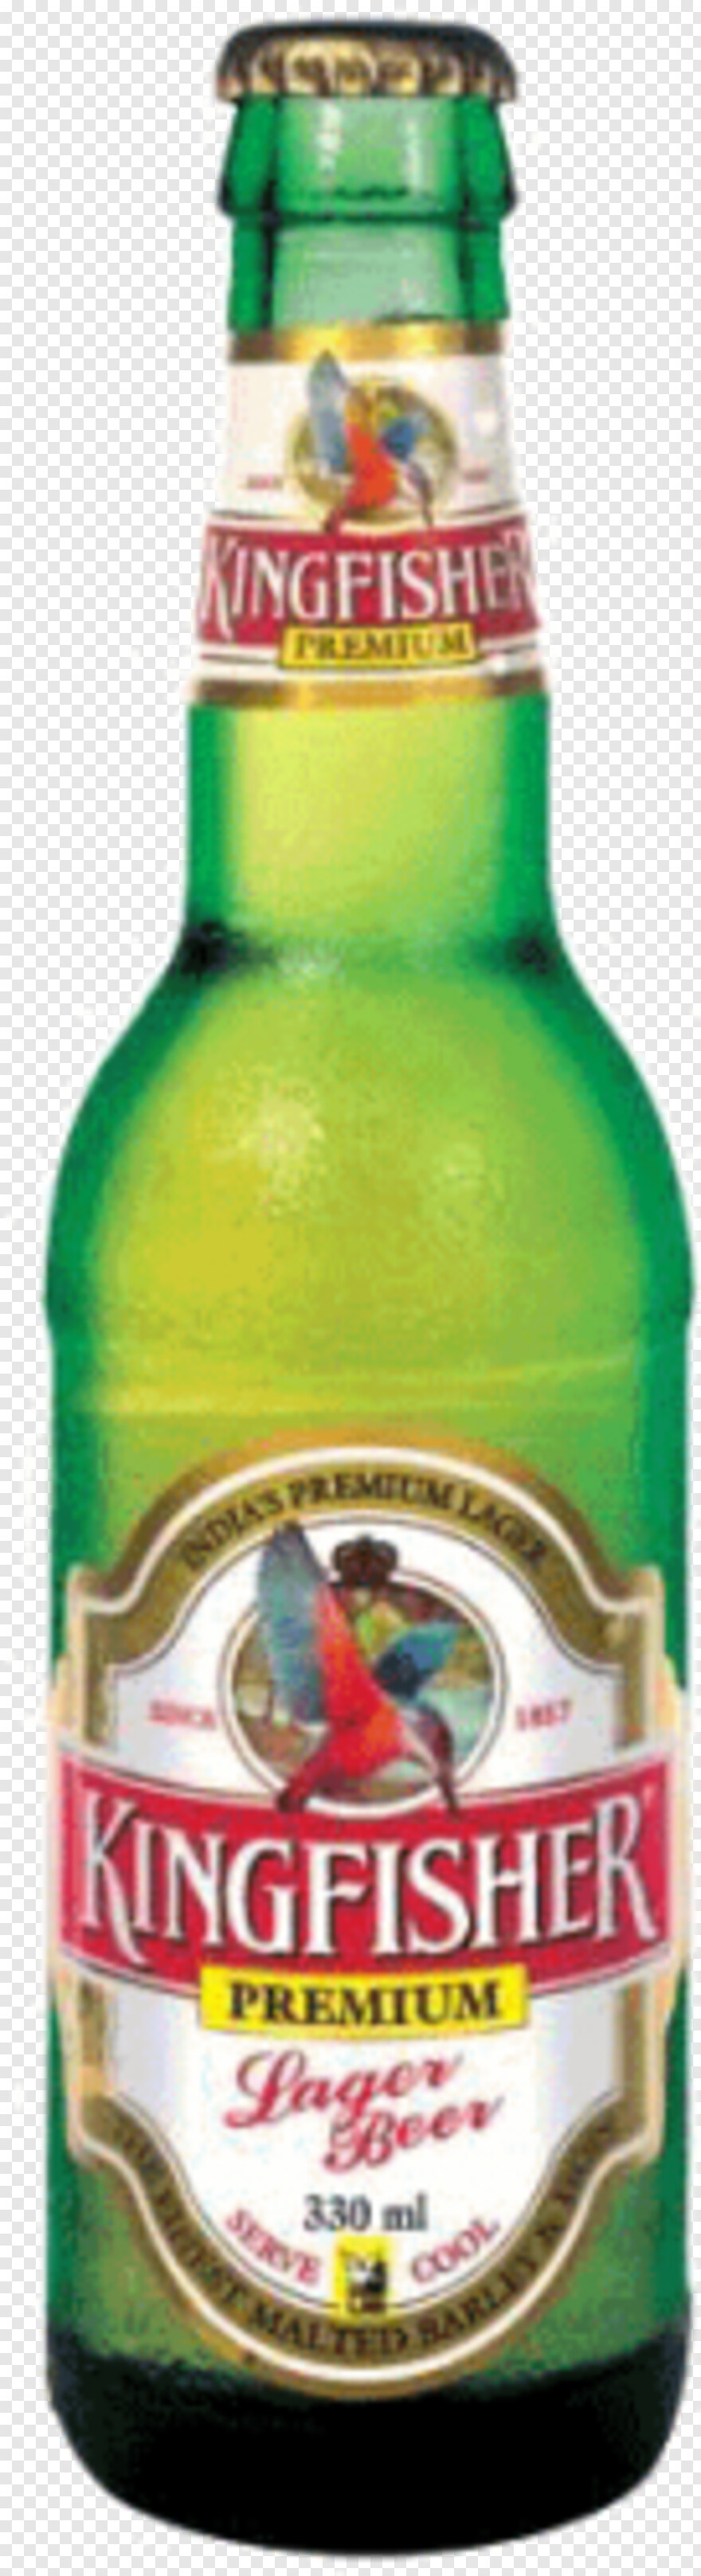 kingfisher-beer # 381352